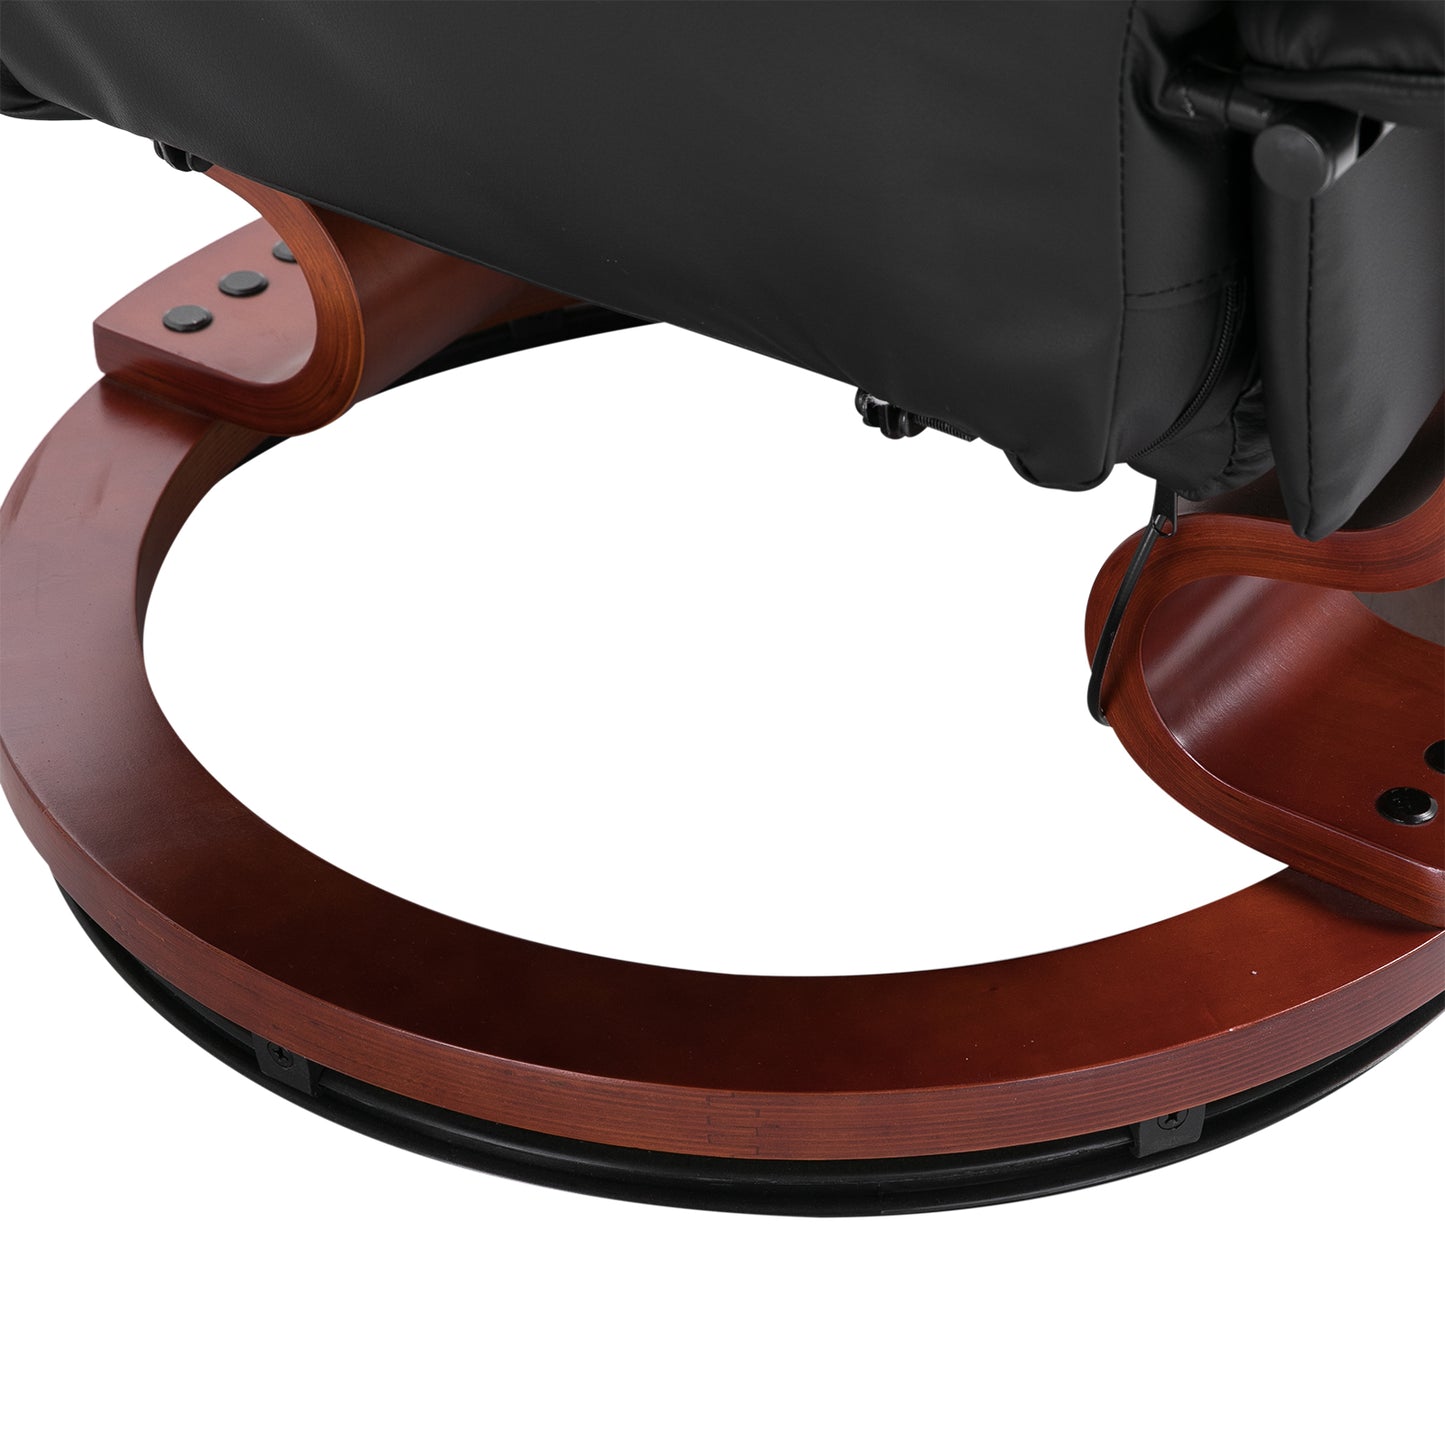 HOMCOM Recliner Chair, PU Leather, 78Wx87Dx100H cm-Black